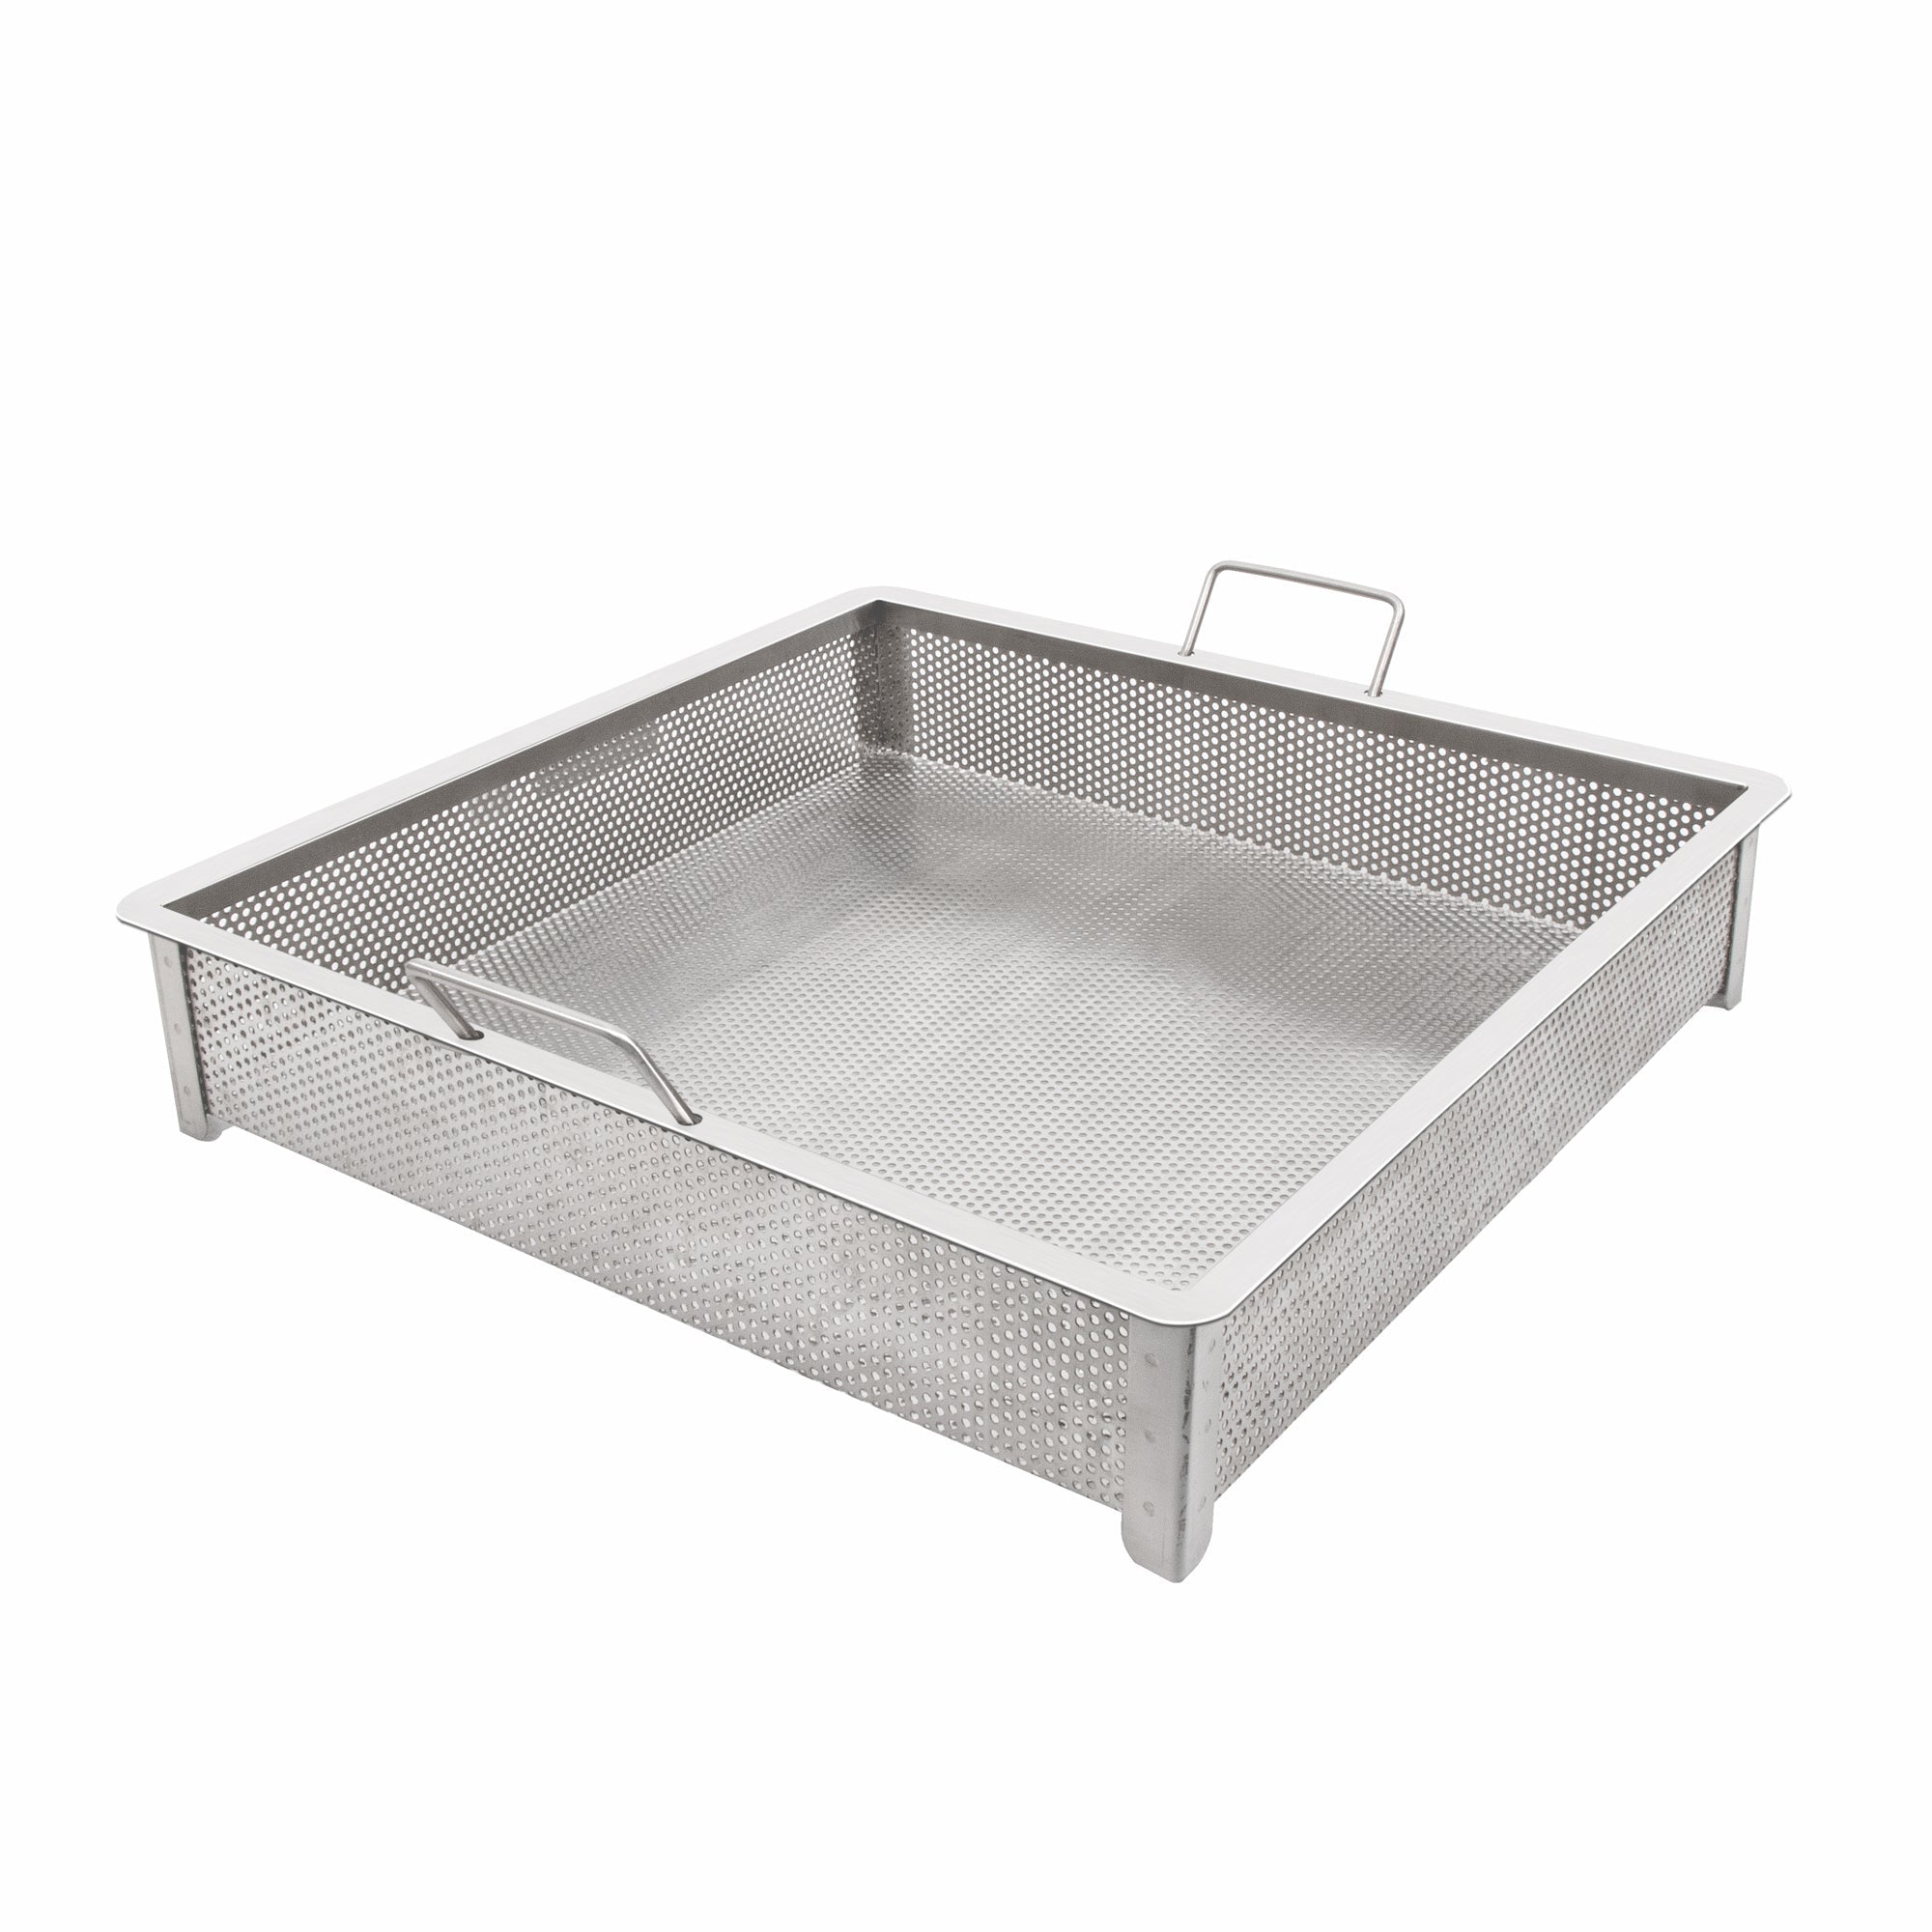 Leyso Stainless Steel Compartment ETL Certified Drop-In Sink Drain Basket (20" x 20", Drain Basket)